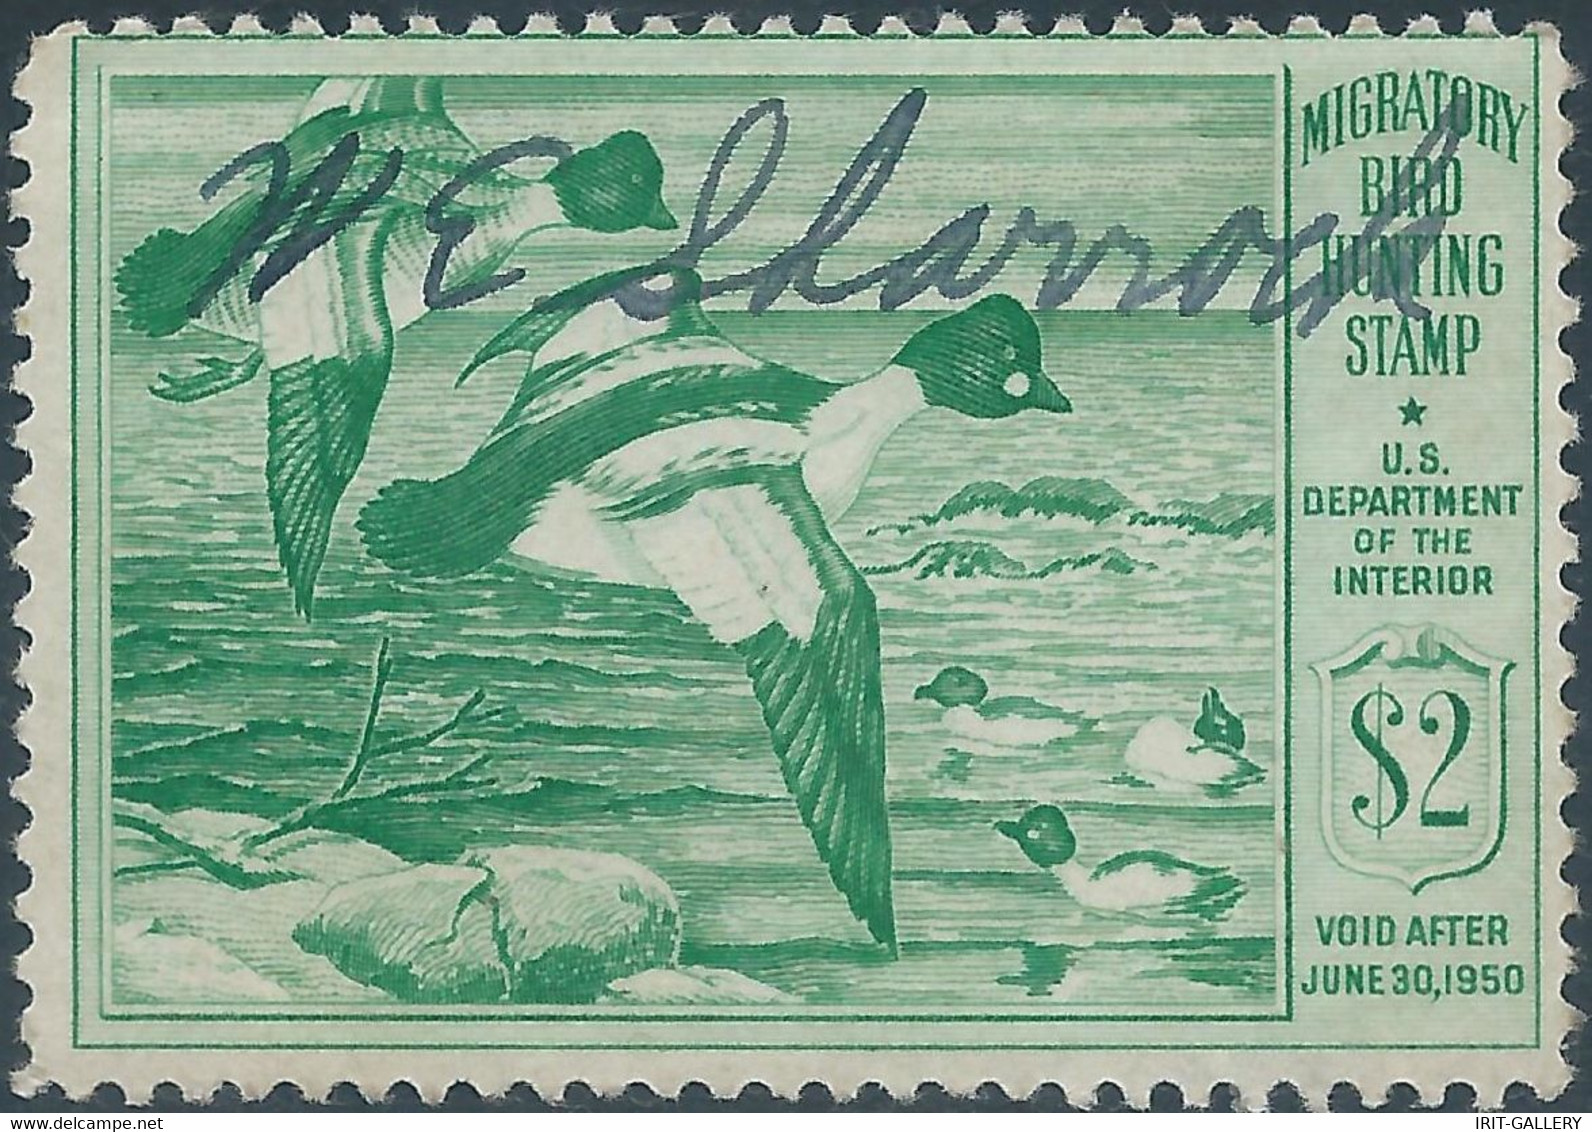 Stati Uniti D'america,United States,U.S.A,1950 Migratory Bird Hunting Stamp $2.00 ,Singed - Duck Stamps